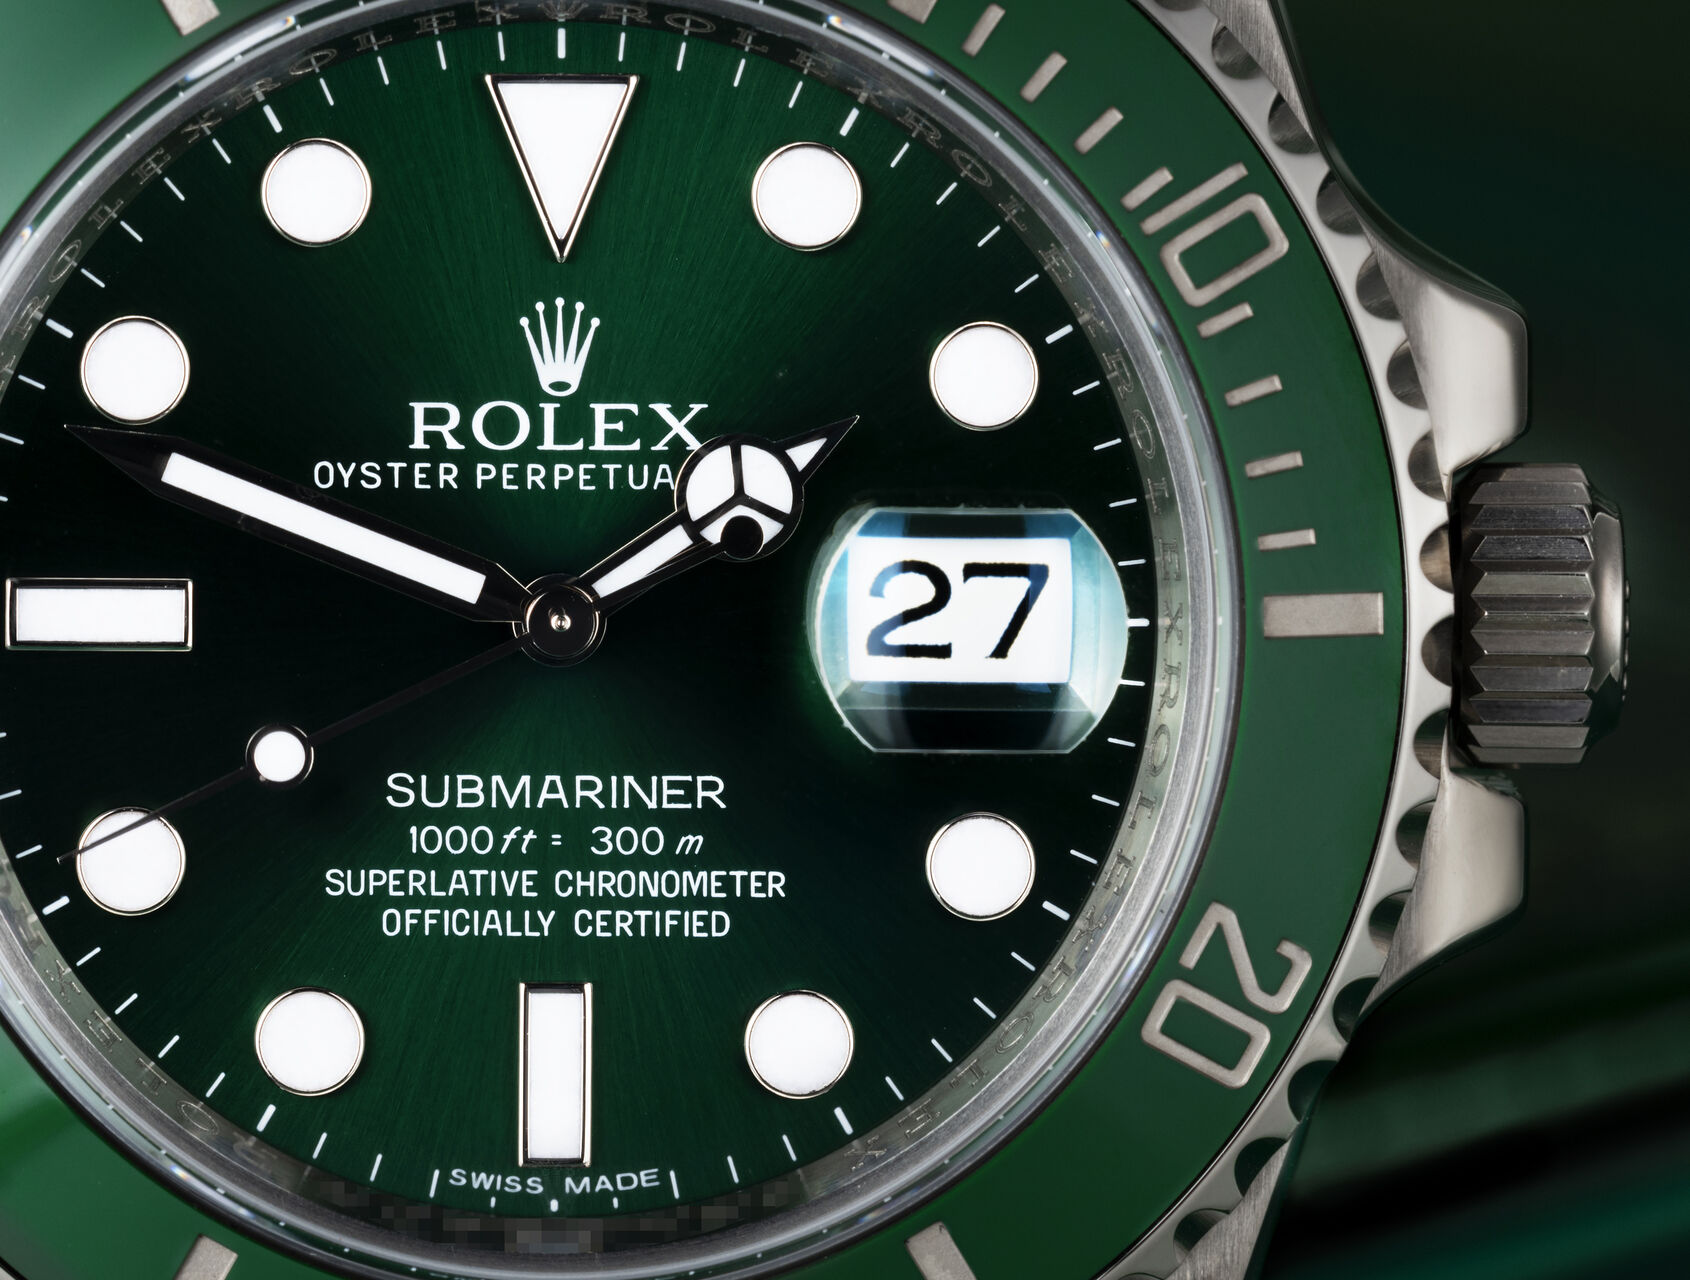 ref 116610LV | 116610LV - Hulk | Rolex Submariner Date